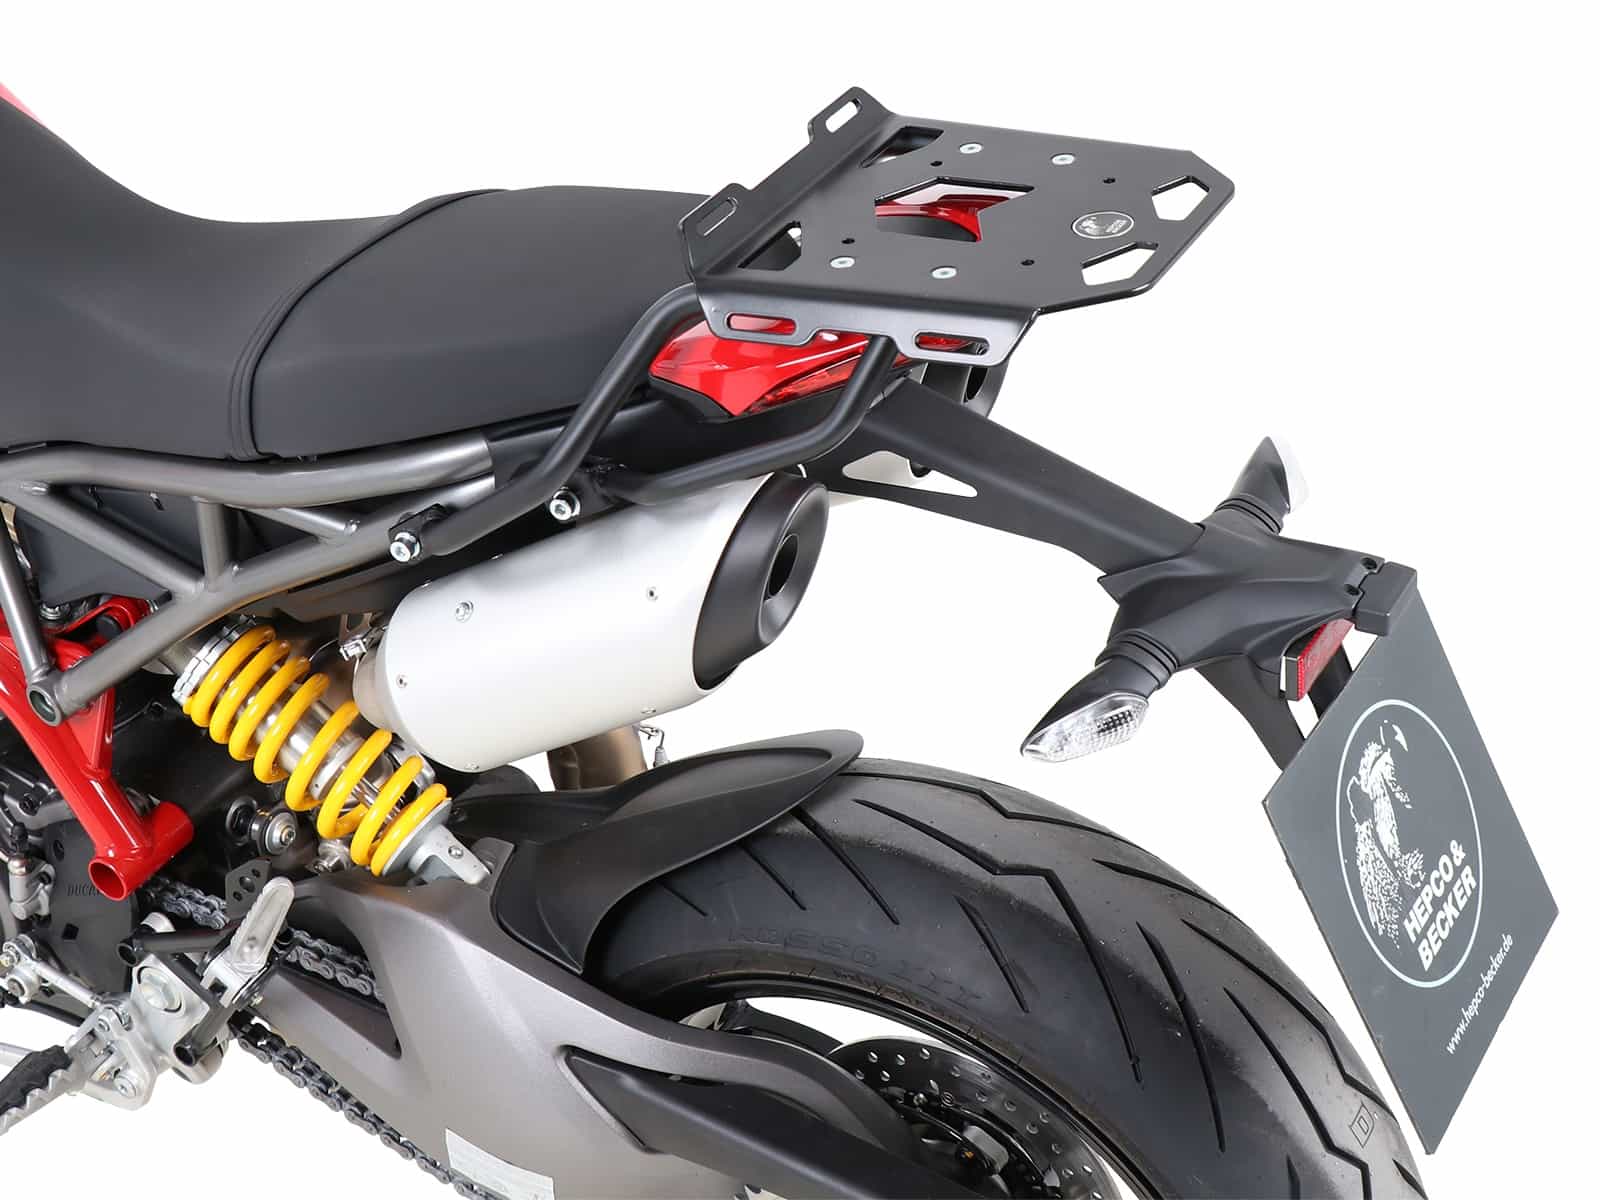 Minirack soft luggage rear rack for Ducati Hypermotard 950/SP (2019-)